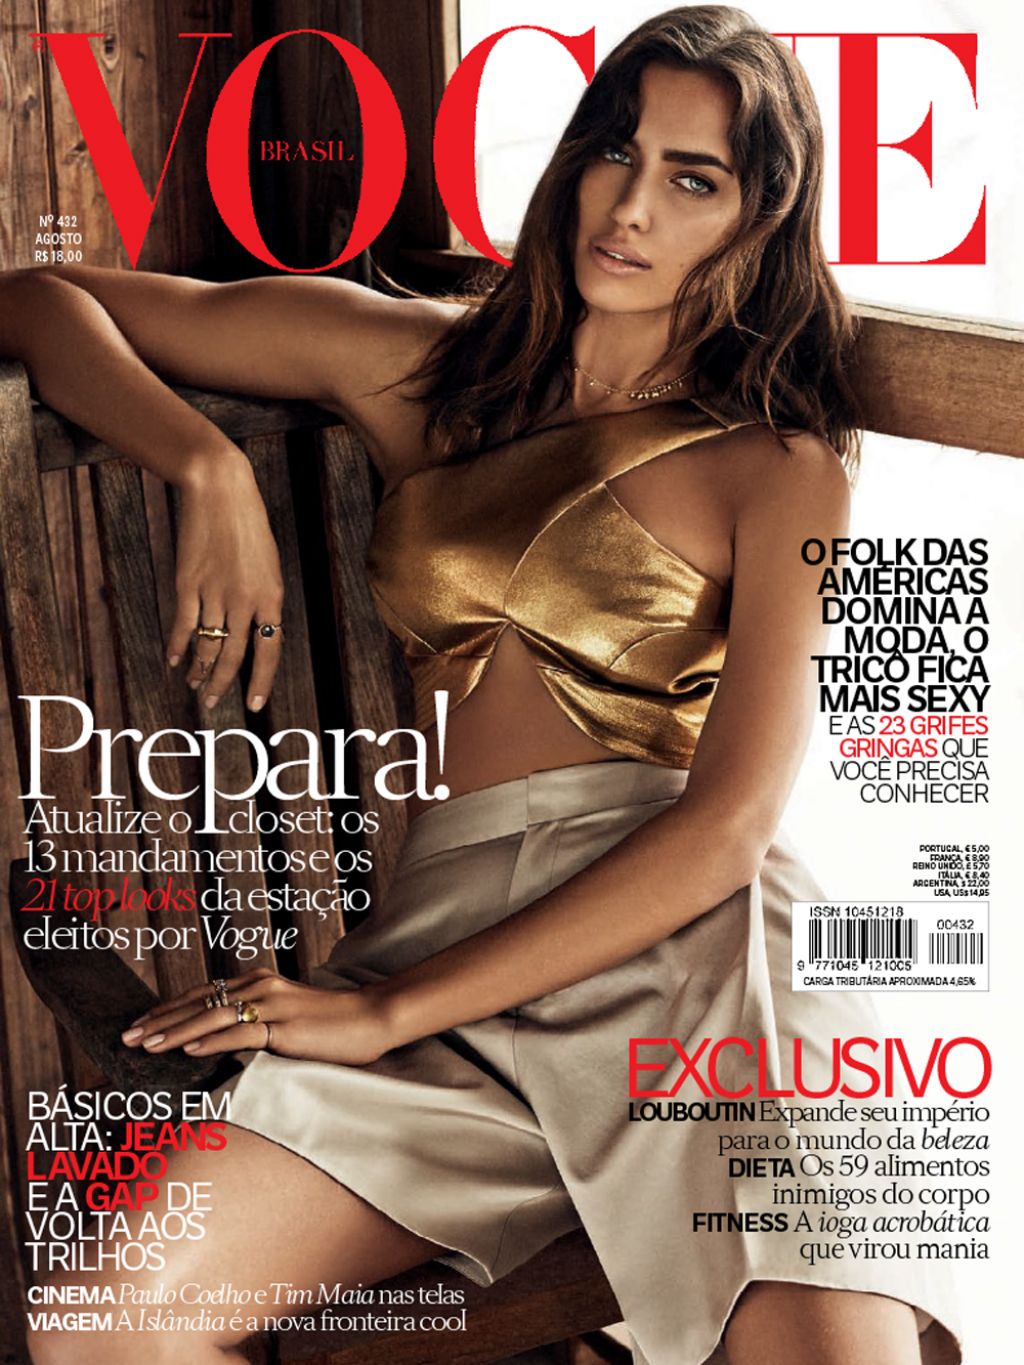 Irina Shayk - Vogue Magazine (Brazil) - August 2014 Issue